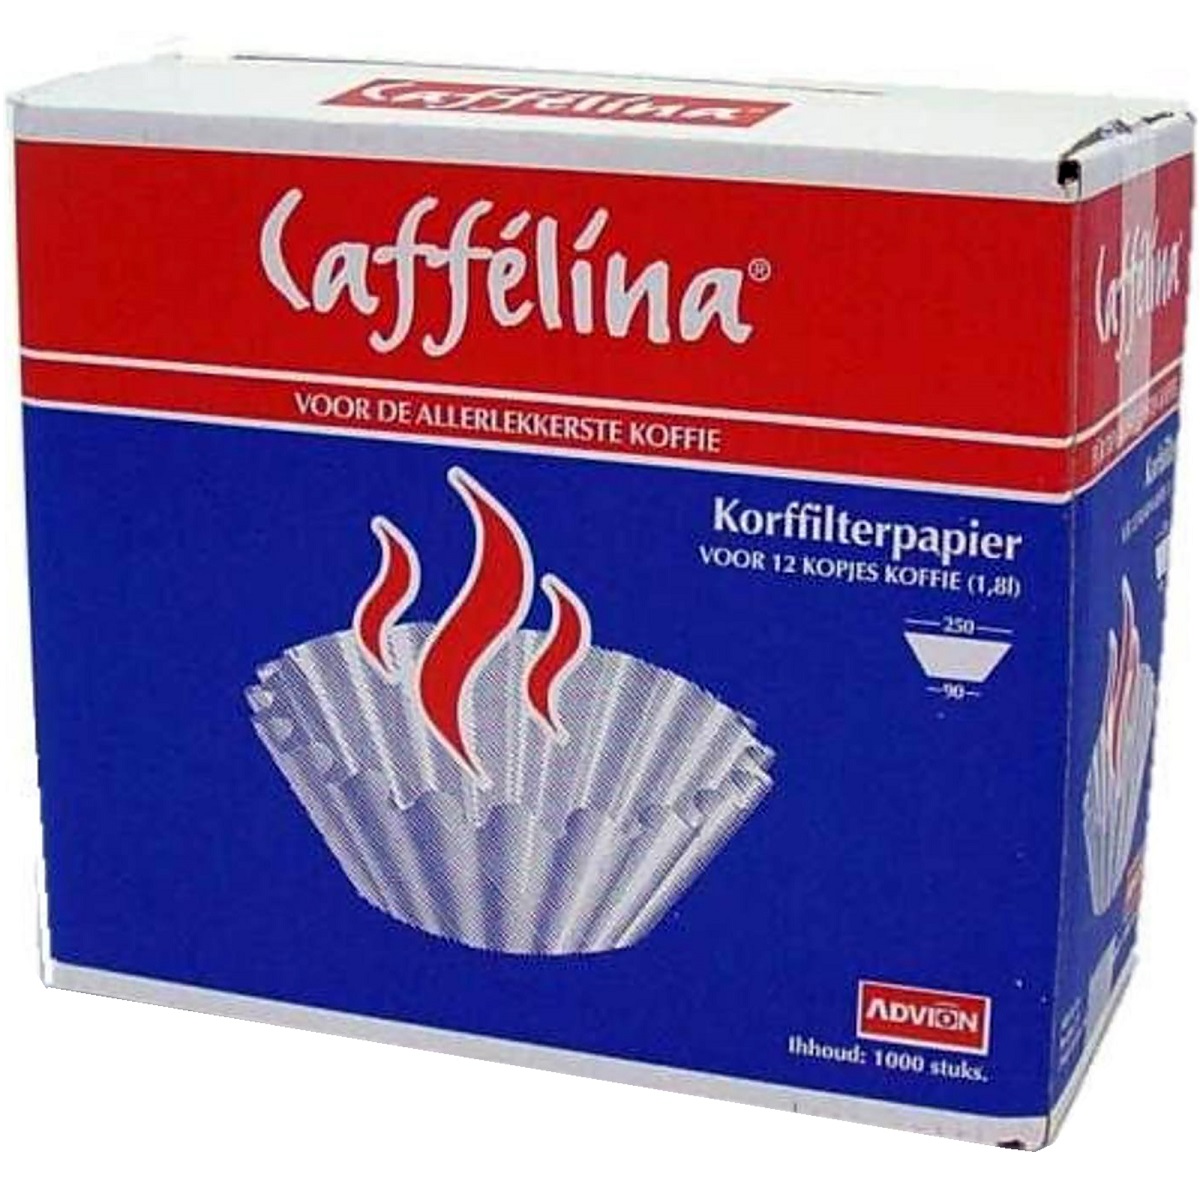 8860054  Caffellina Koffiefilters Korf Bruin 90/250 mm  1000 st